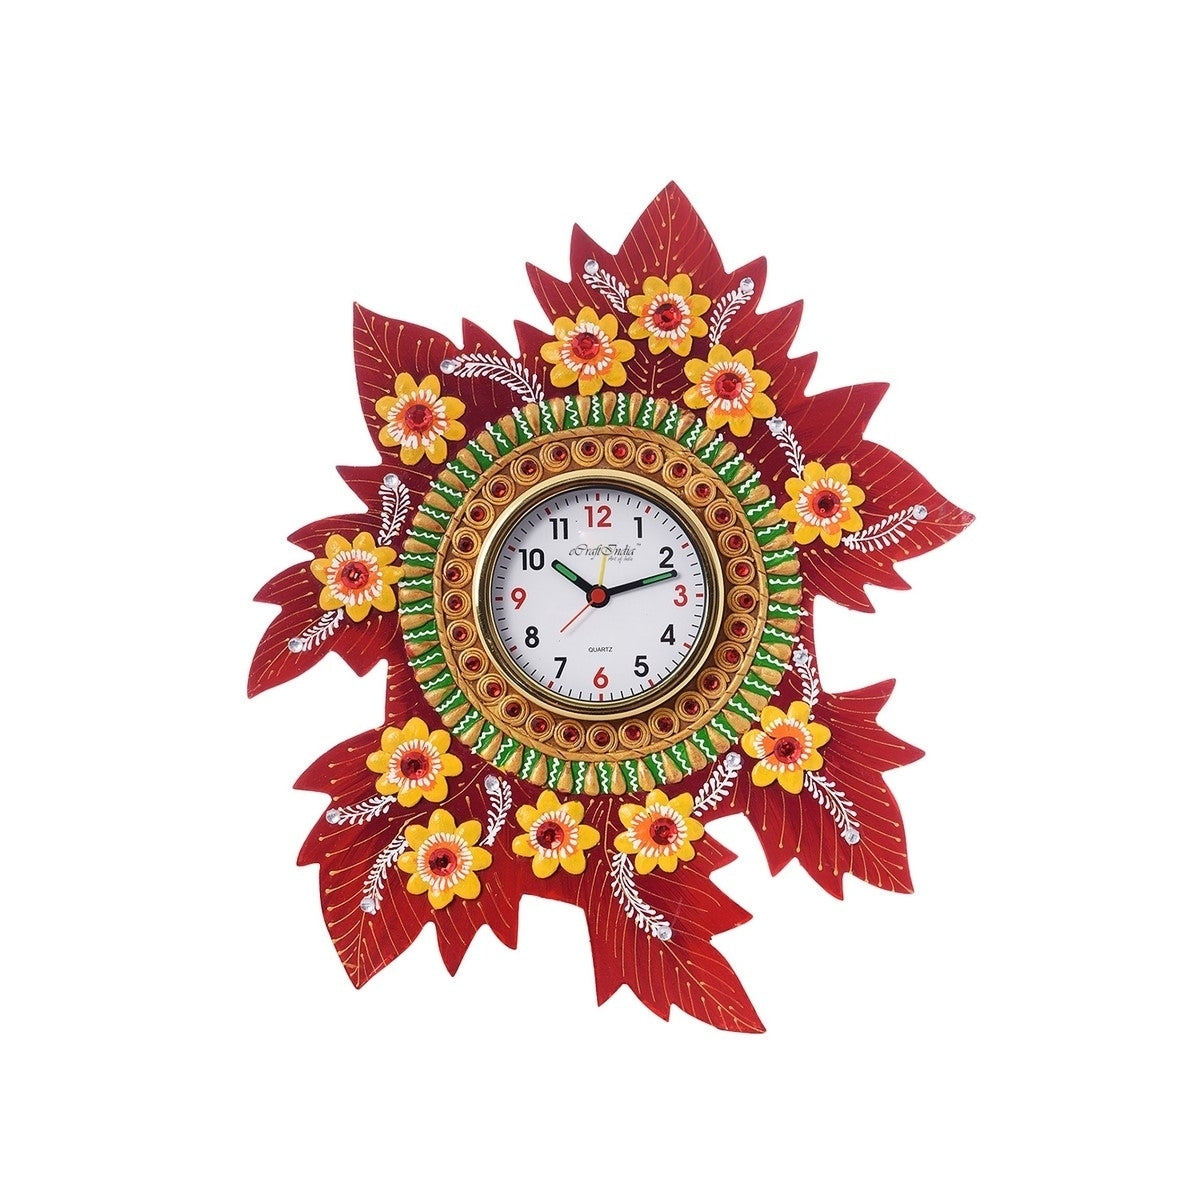 Artistic Handicrafted Leaf Shape Papier-Mache Wooden Wall Clock